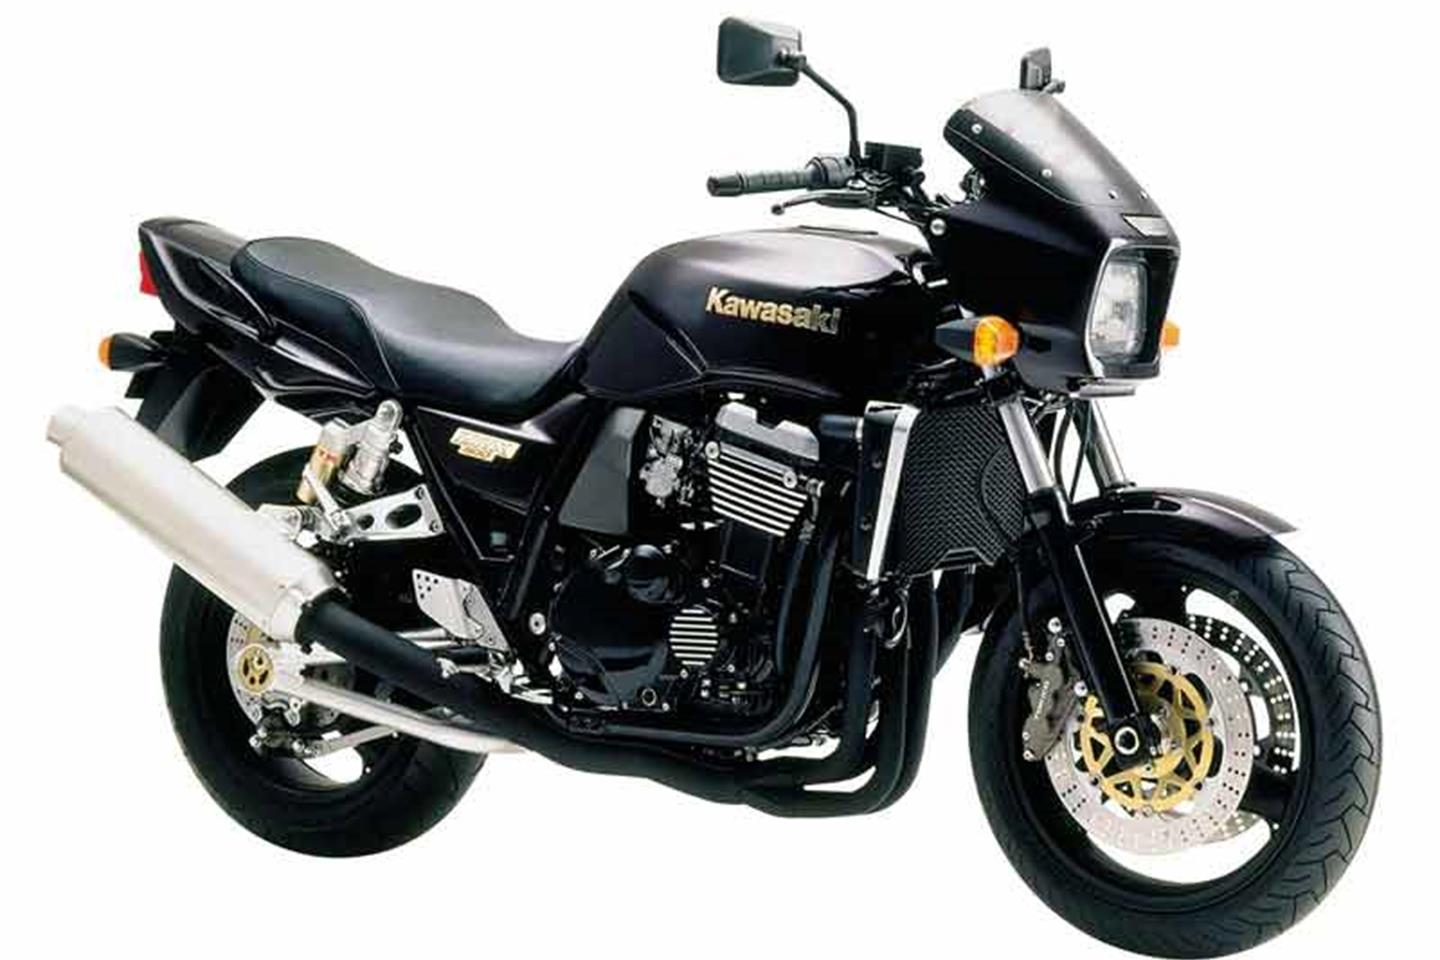 KAWASAKI ZRX1100 (1997-2001) Review | Specs & Prices | MCN